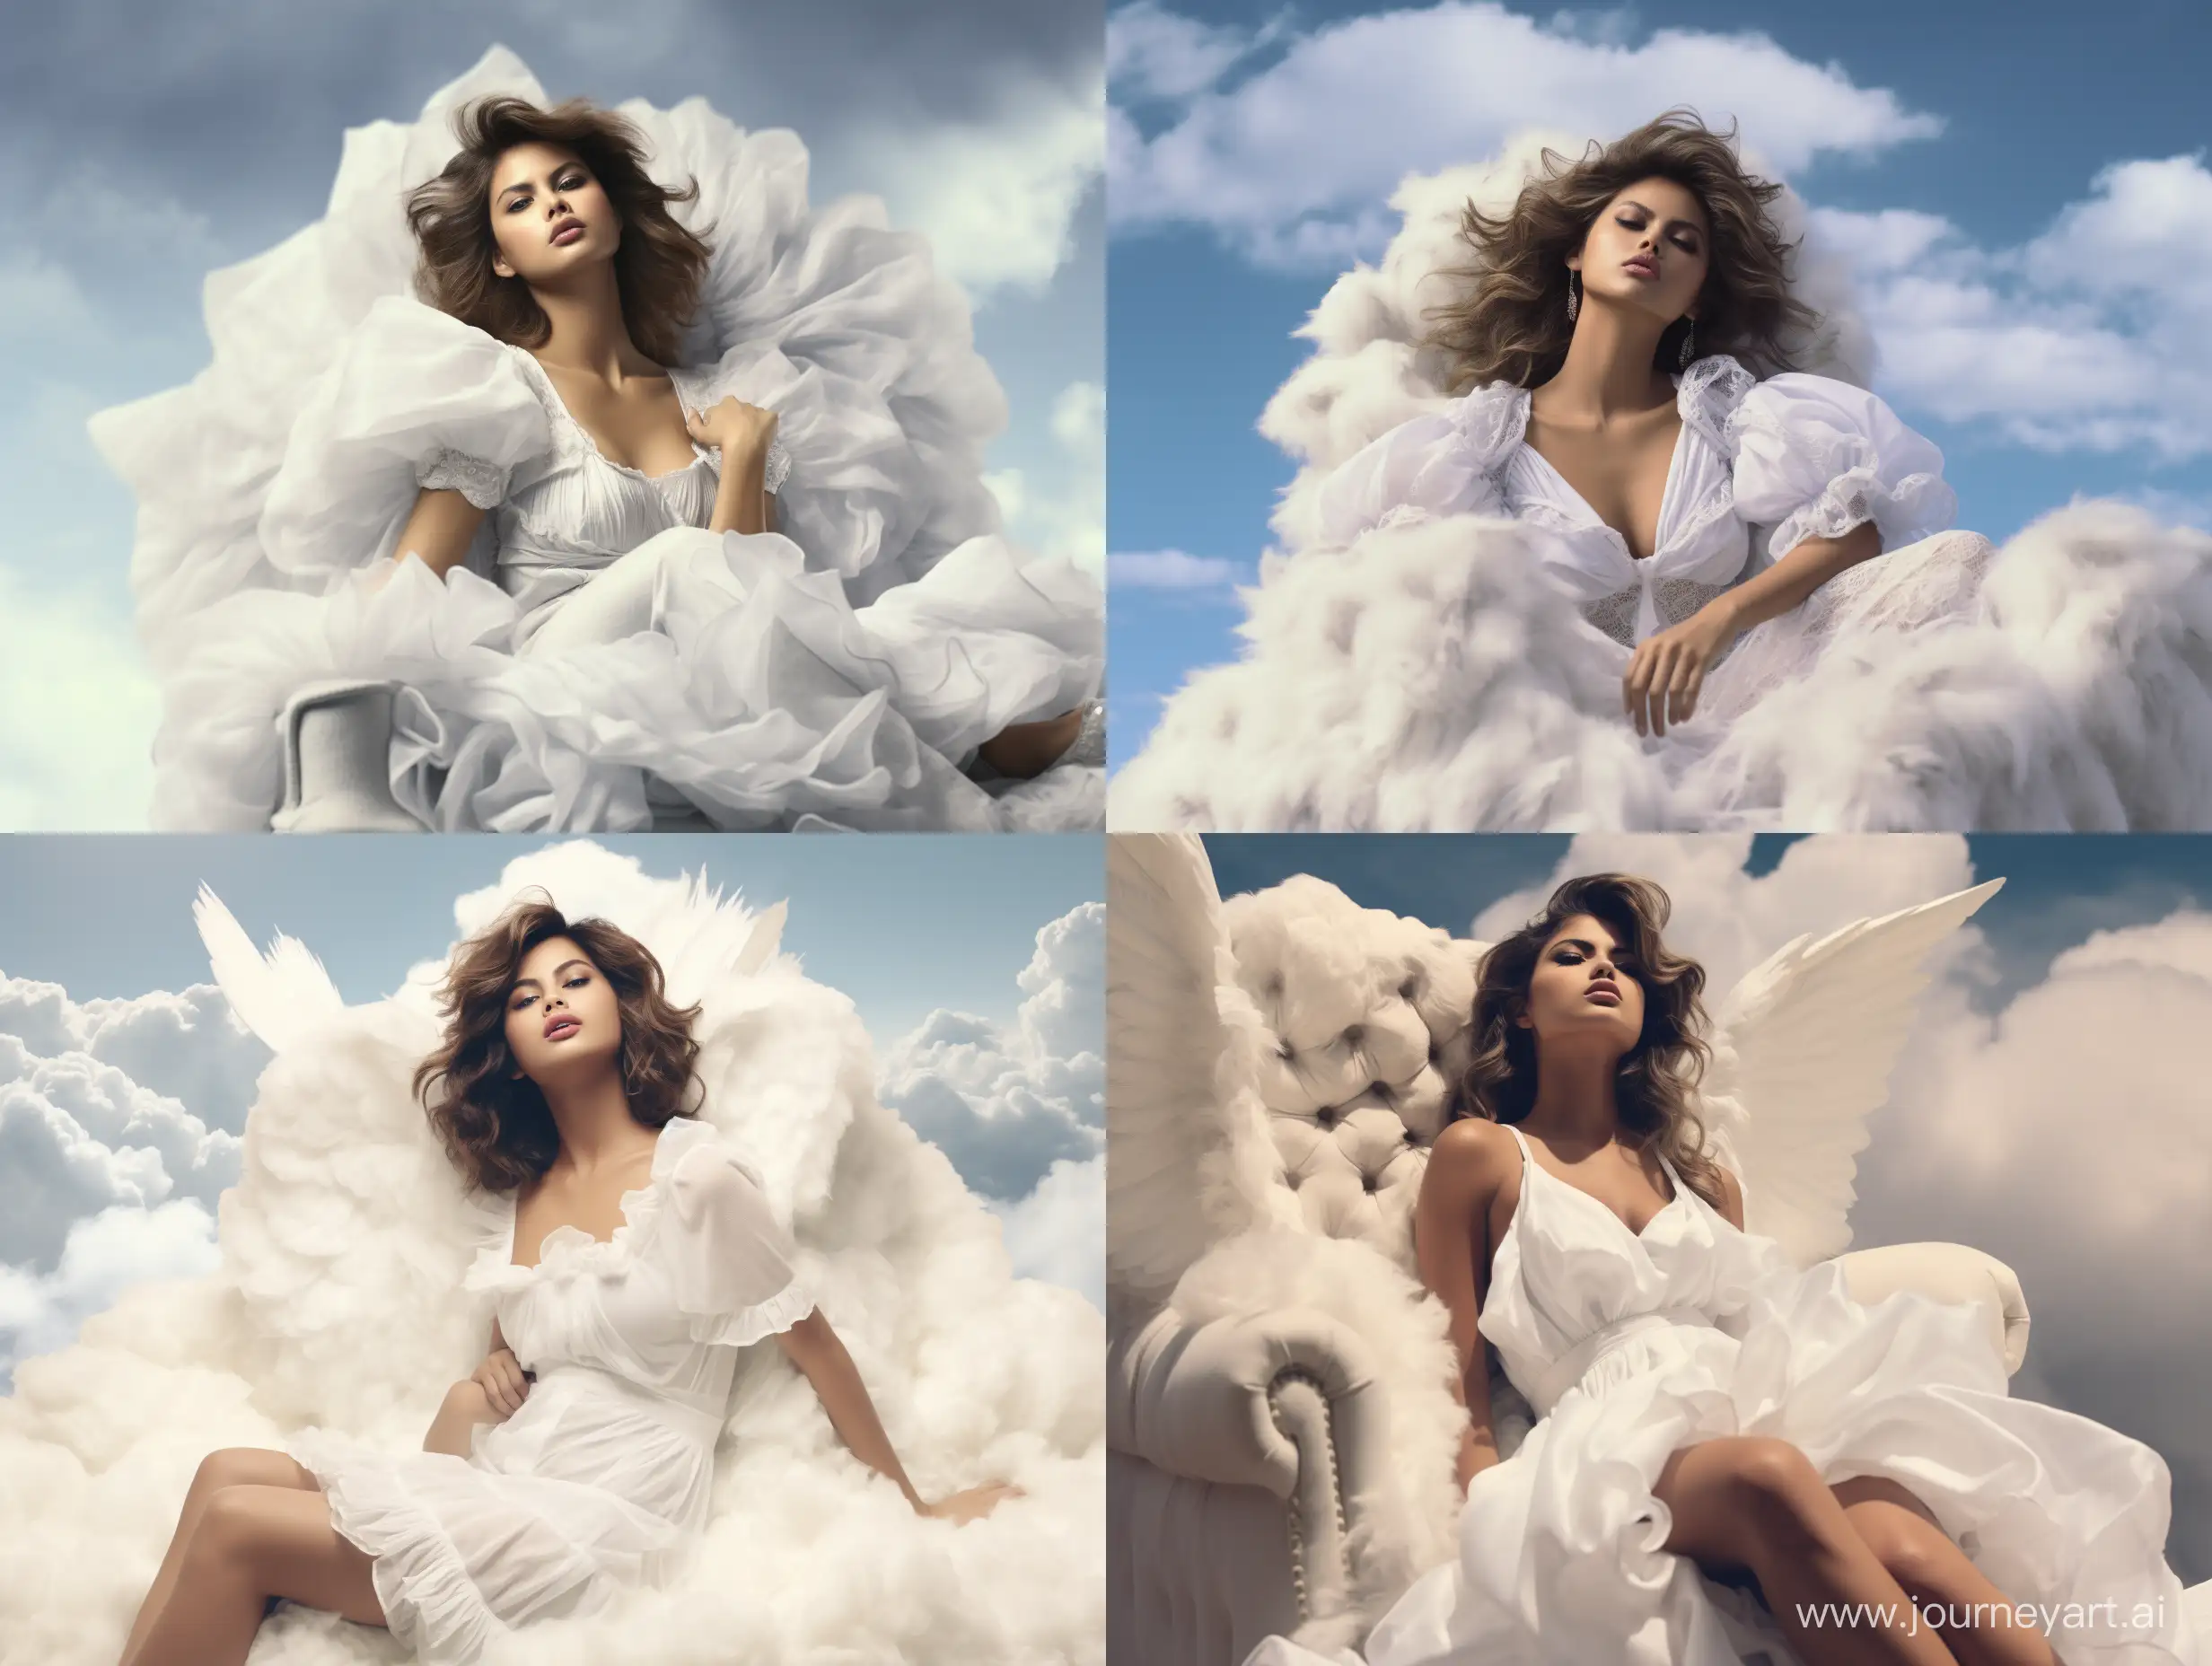 Selena Gomez dressed as an angel sitting on a cloud